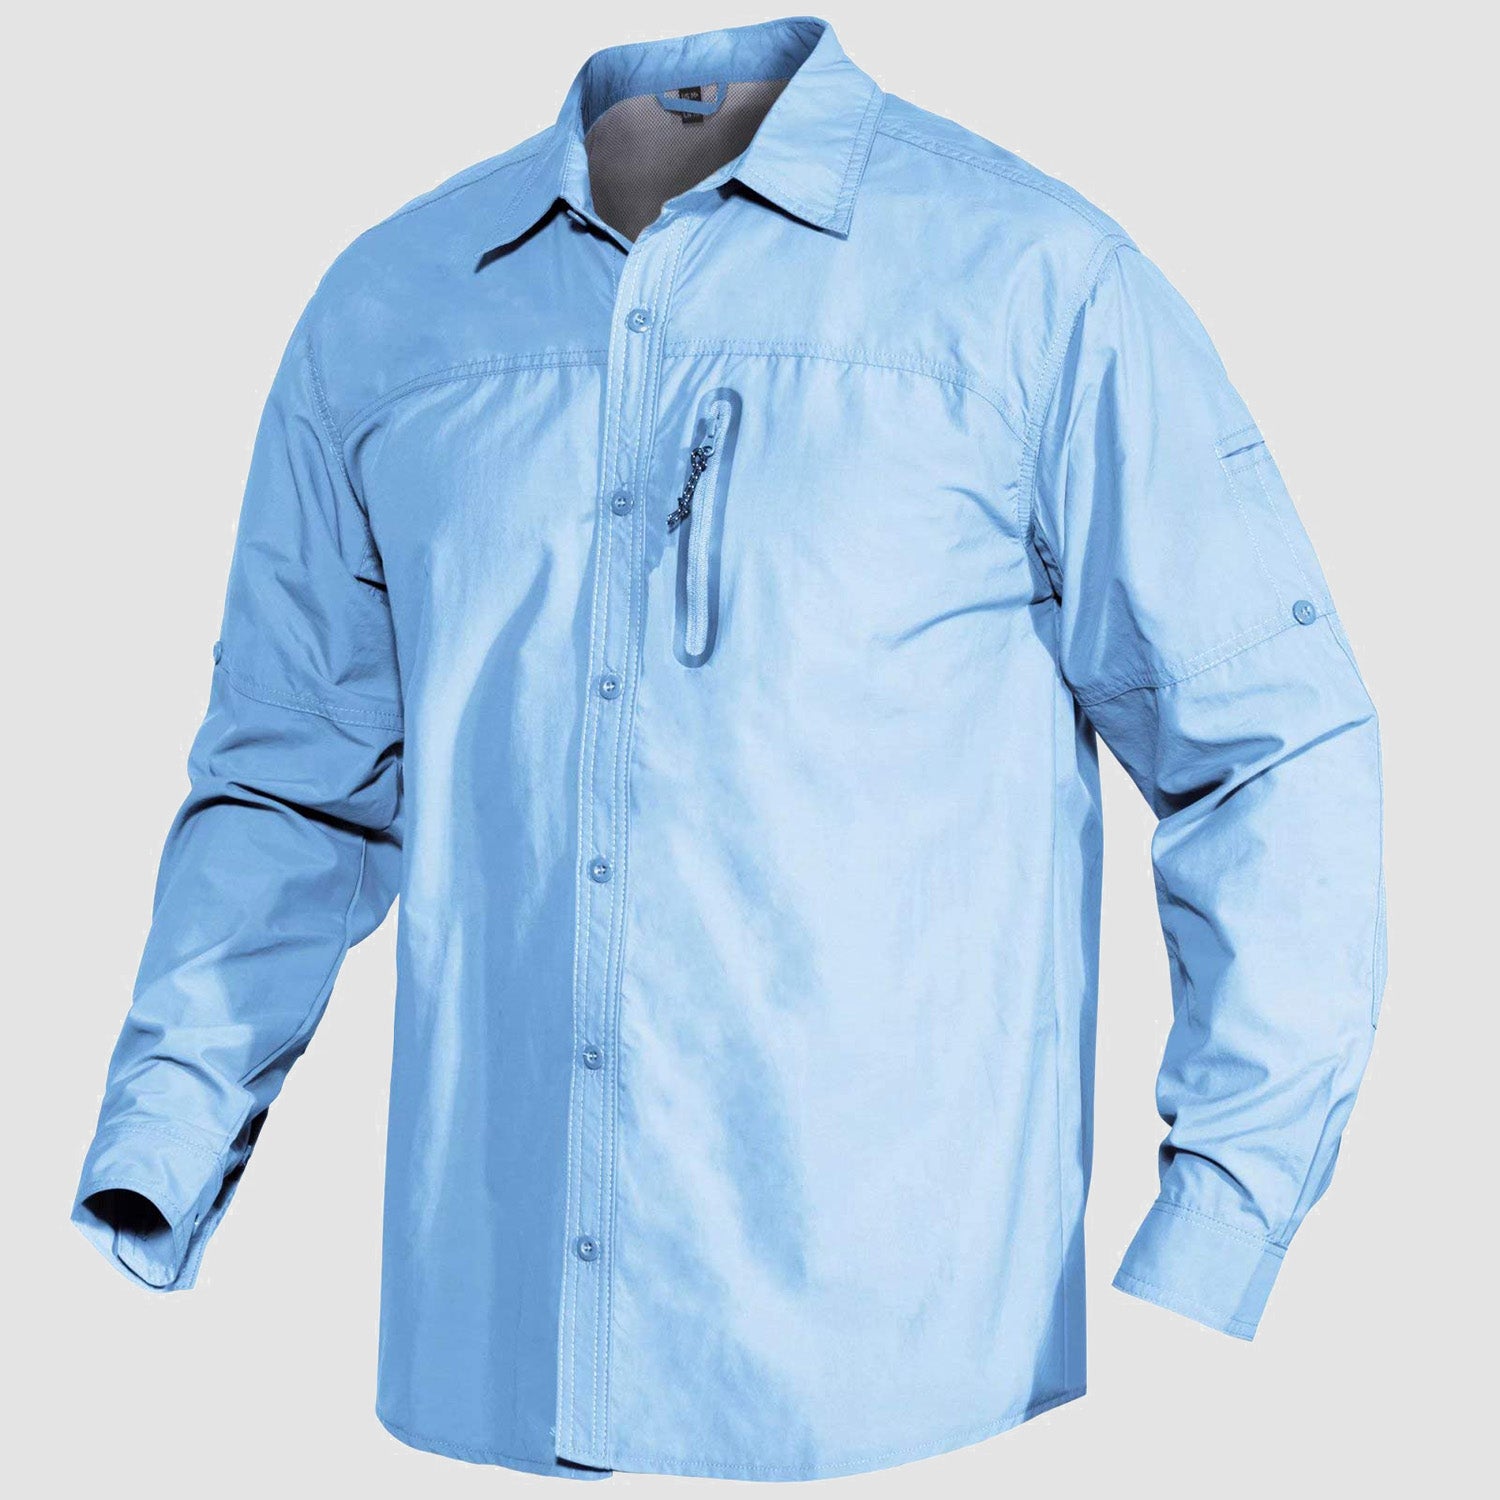 Men's Hiking Shirts with Zipper Pocket Long Sleeve Fishing Work Shirts